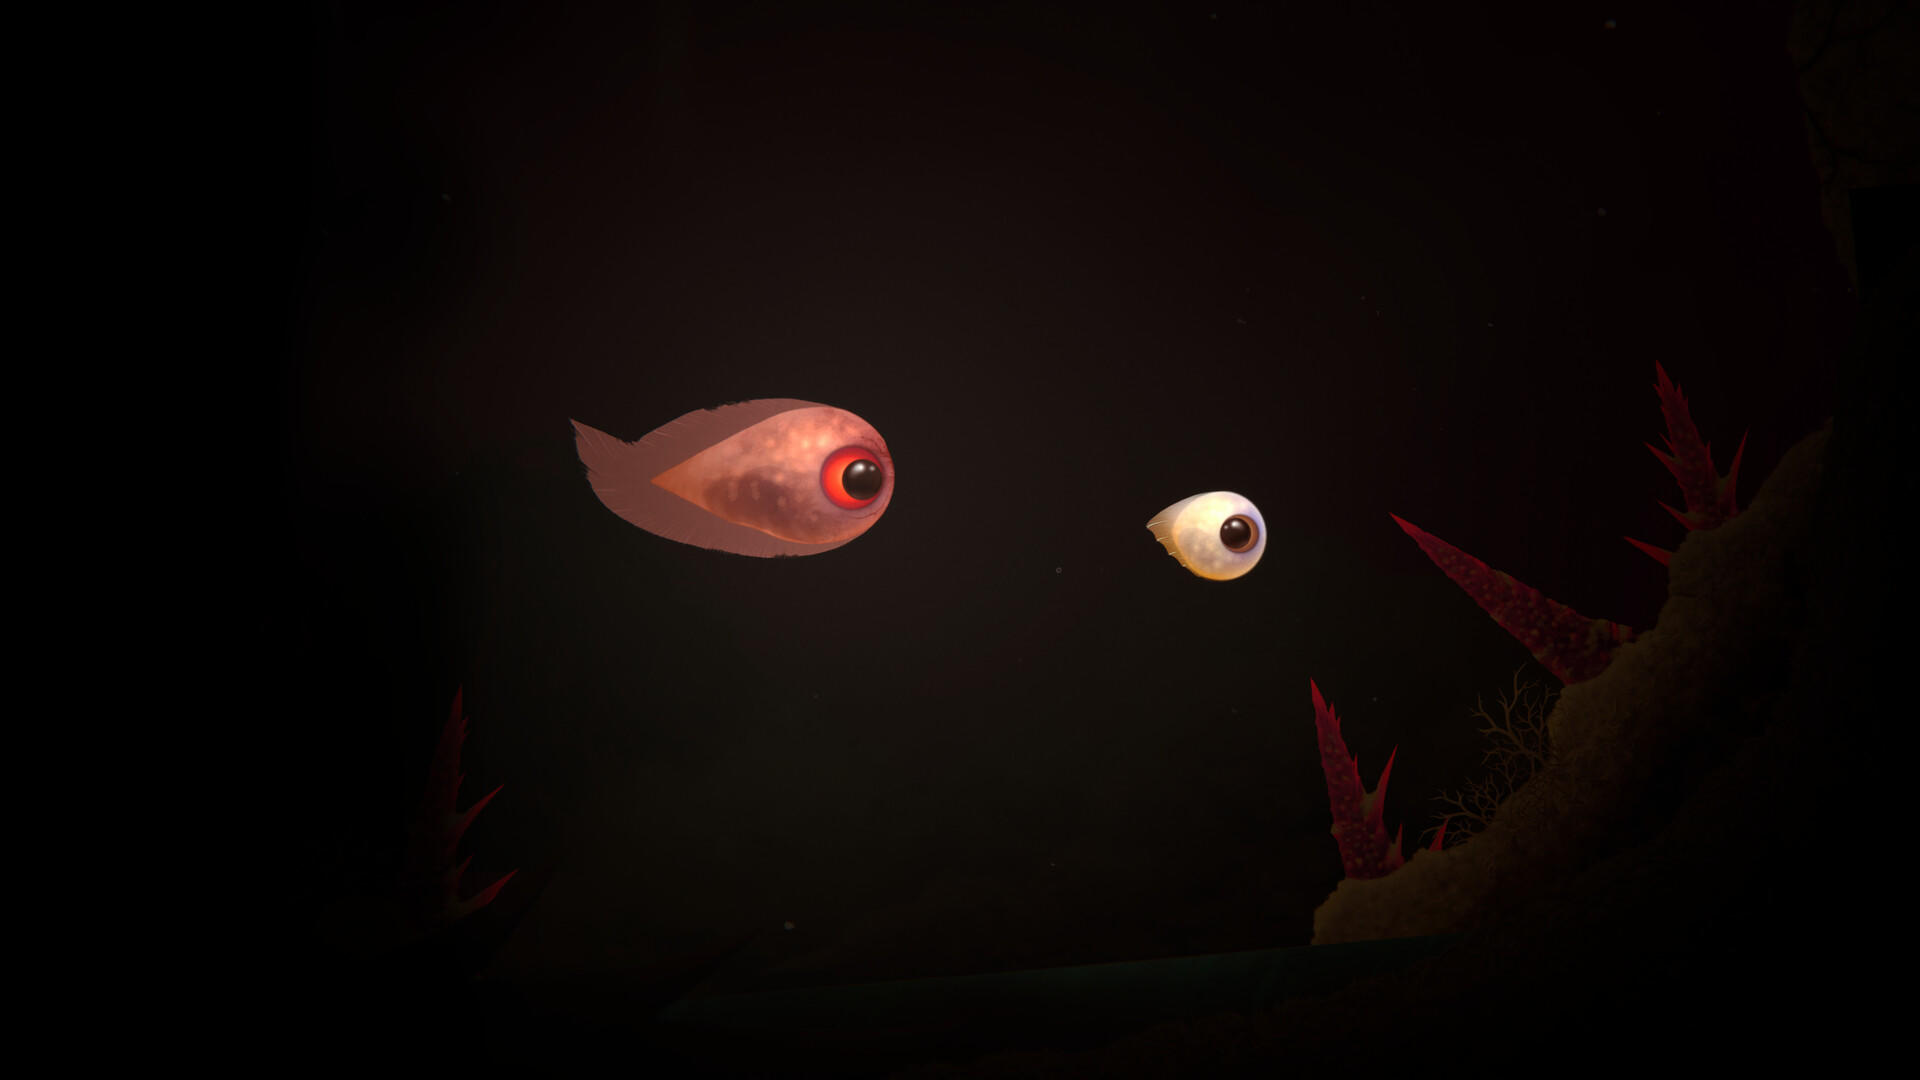 Evolution: From the little light screenshot game